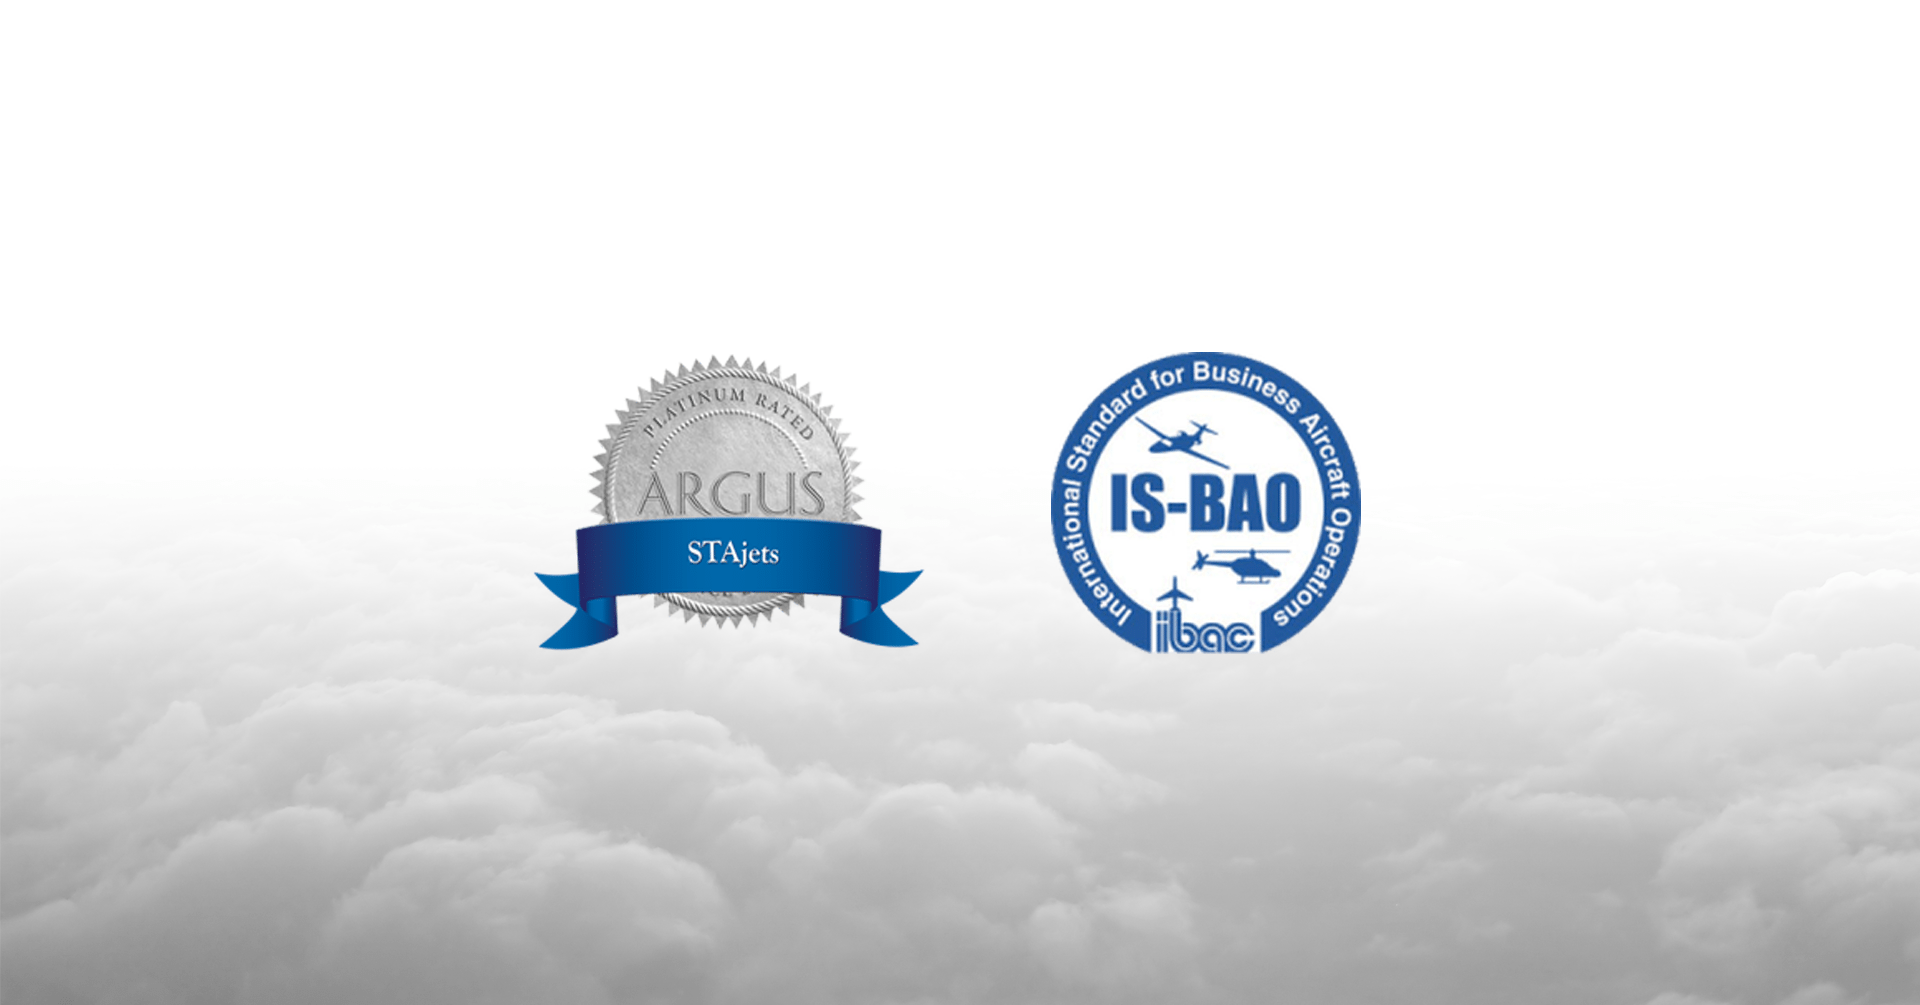 STA Jets Achieves Prestigious ARGUS Platinum Safety Rating,  Plus IS-BAO Stage One Registration